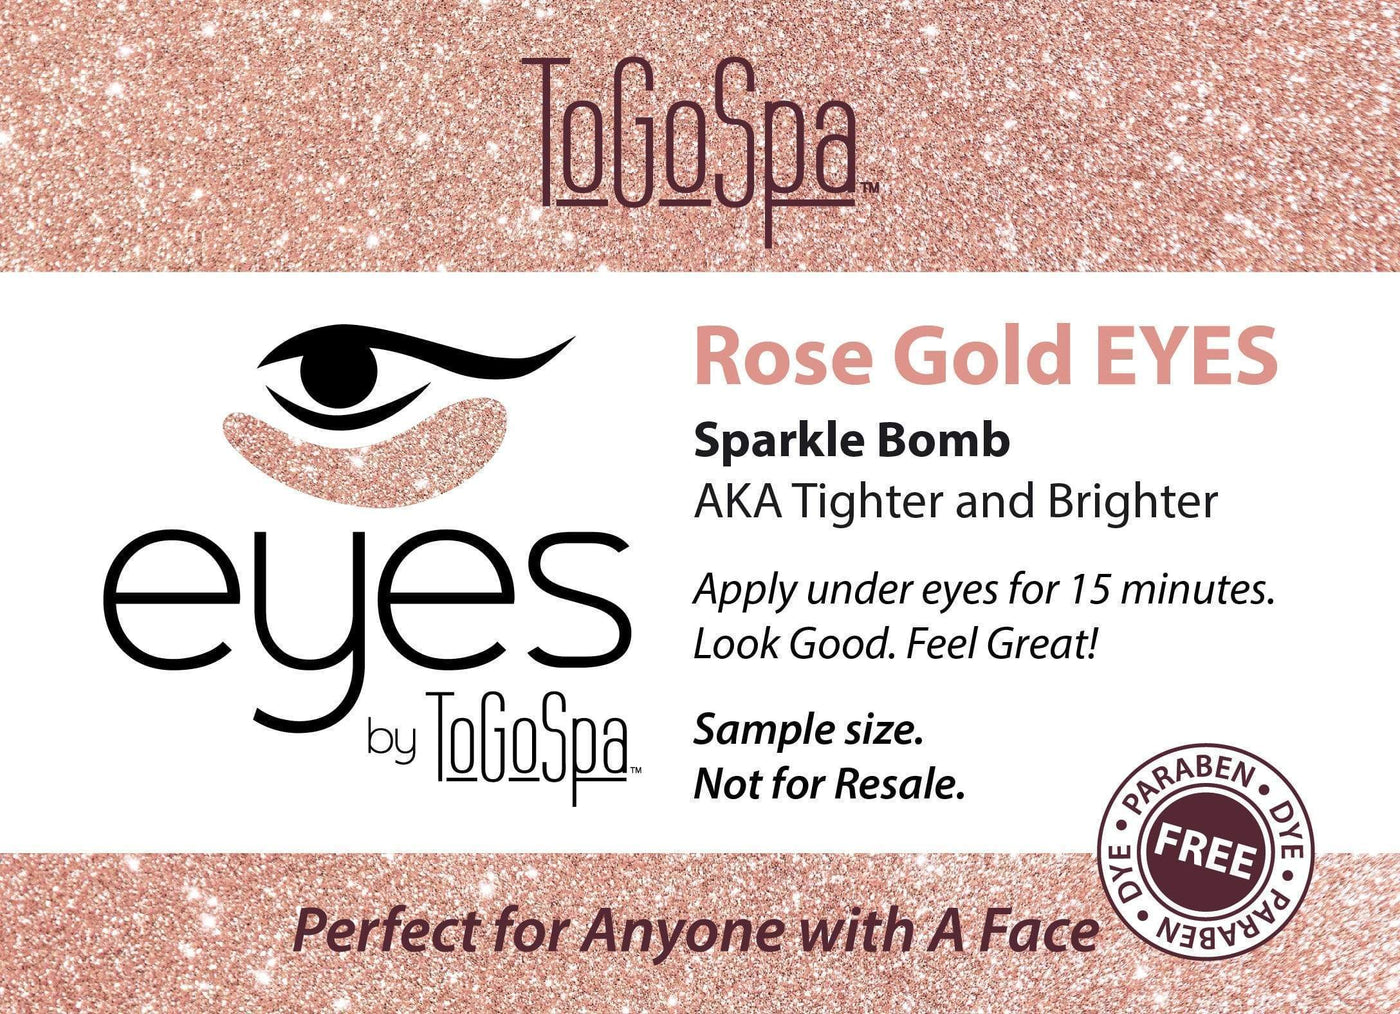 ToGoSpa wholesale Rose Gold Eyes Wholesale Eyes and Lips Promotional Giveaway Singles